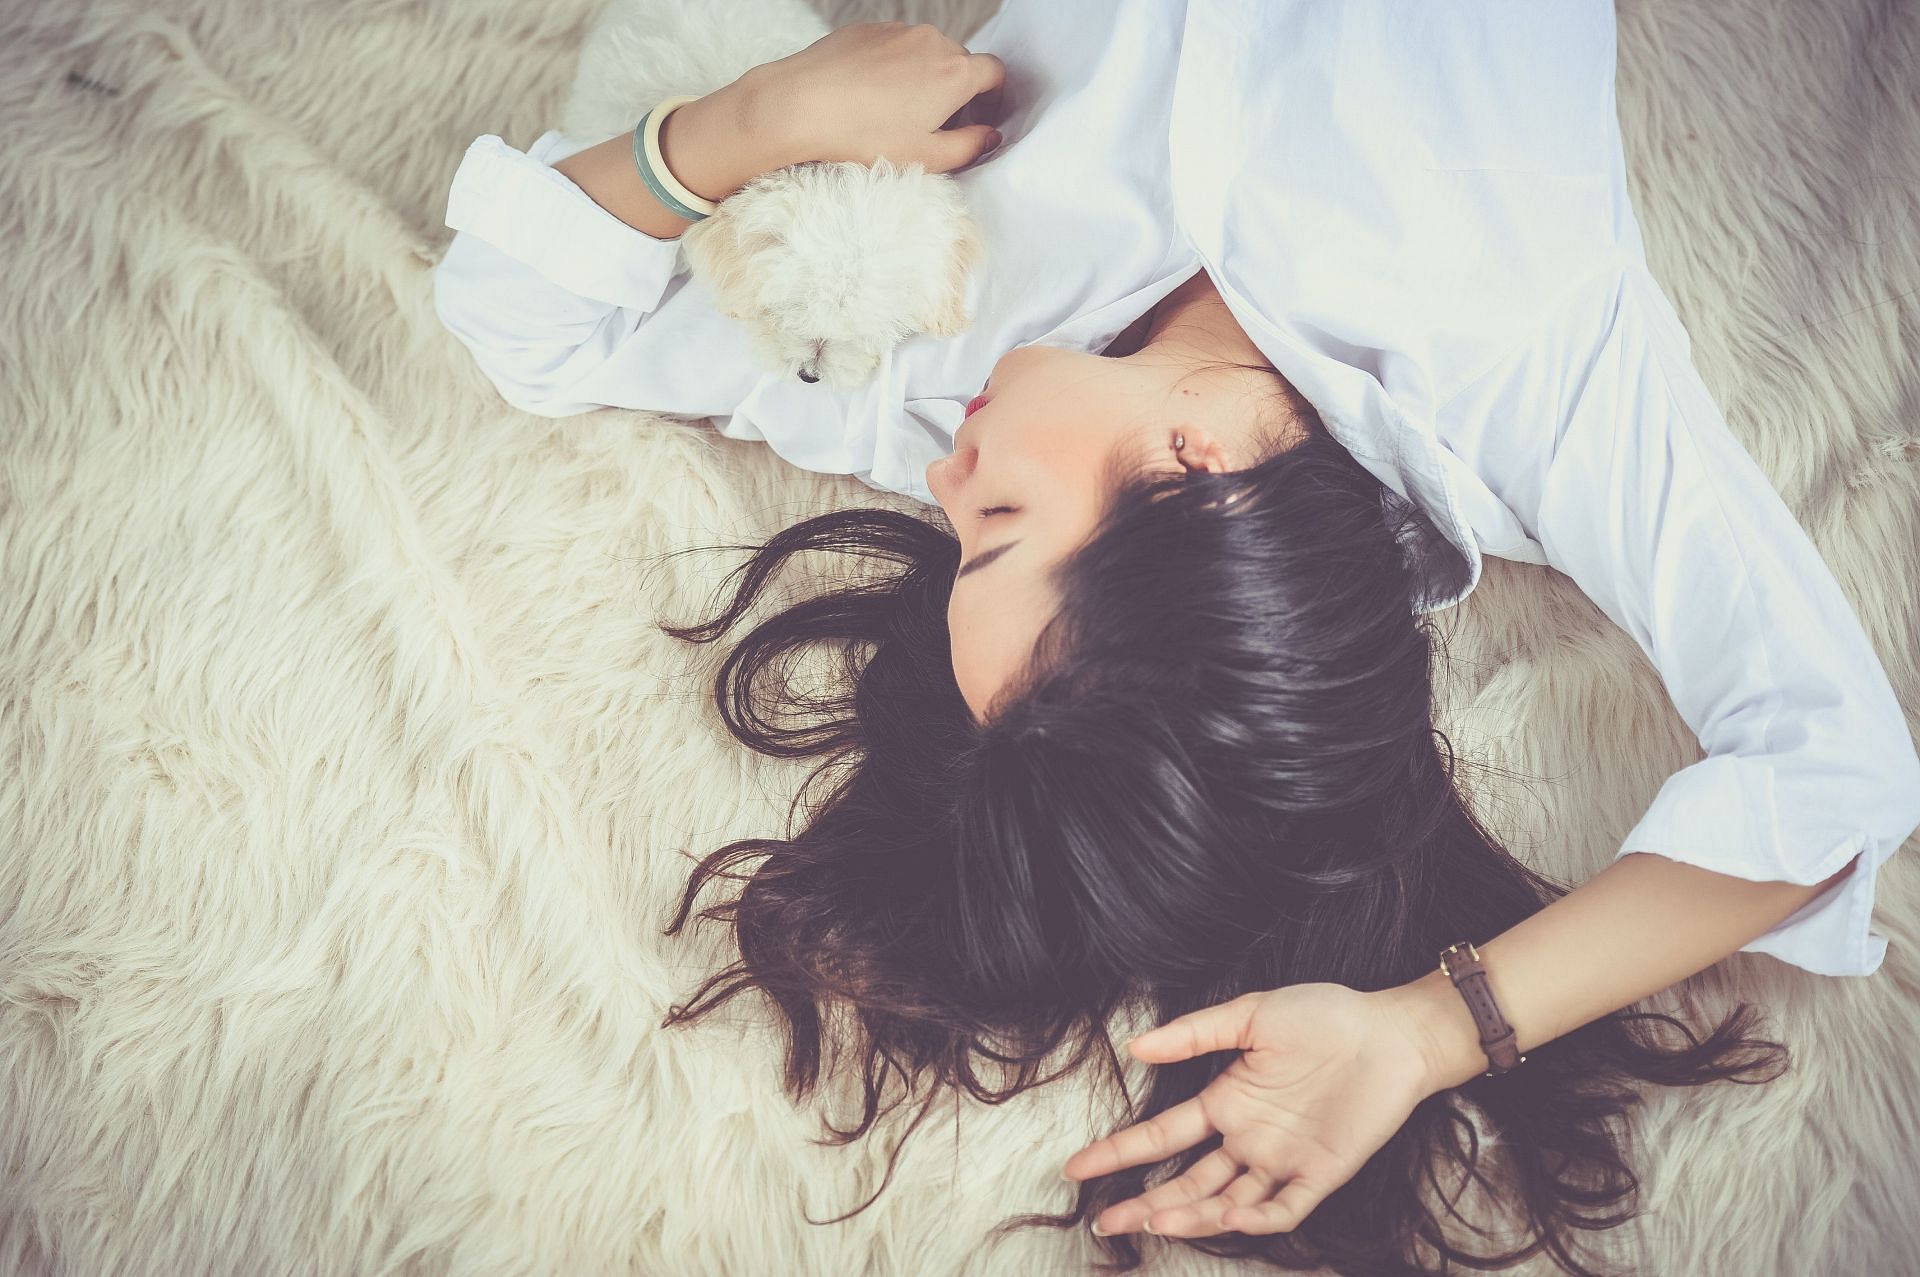 Sleeping on the back can help you fall asleep faster. (Image via Pexels/Pixabay)